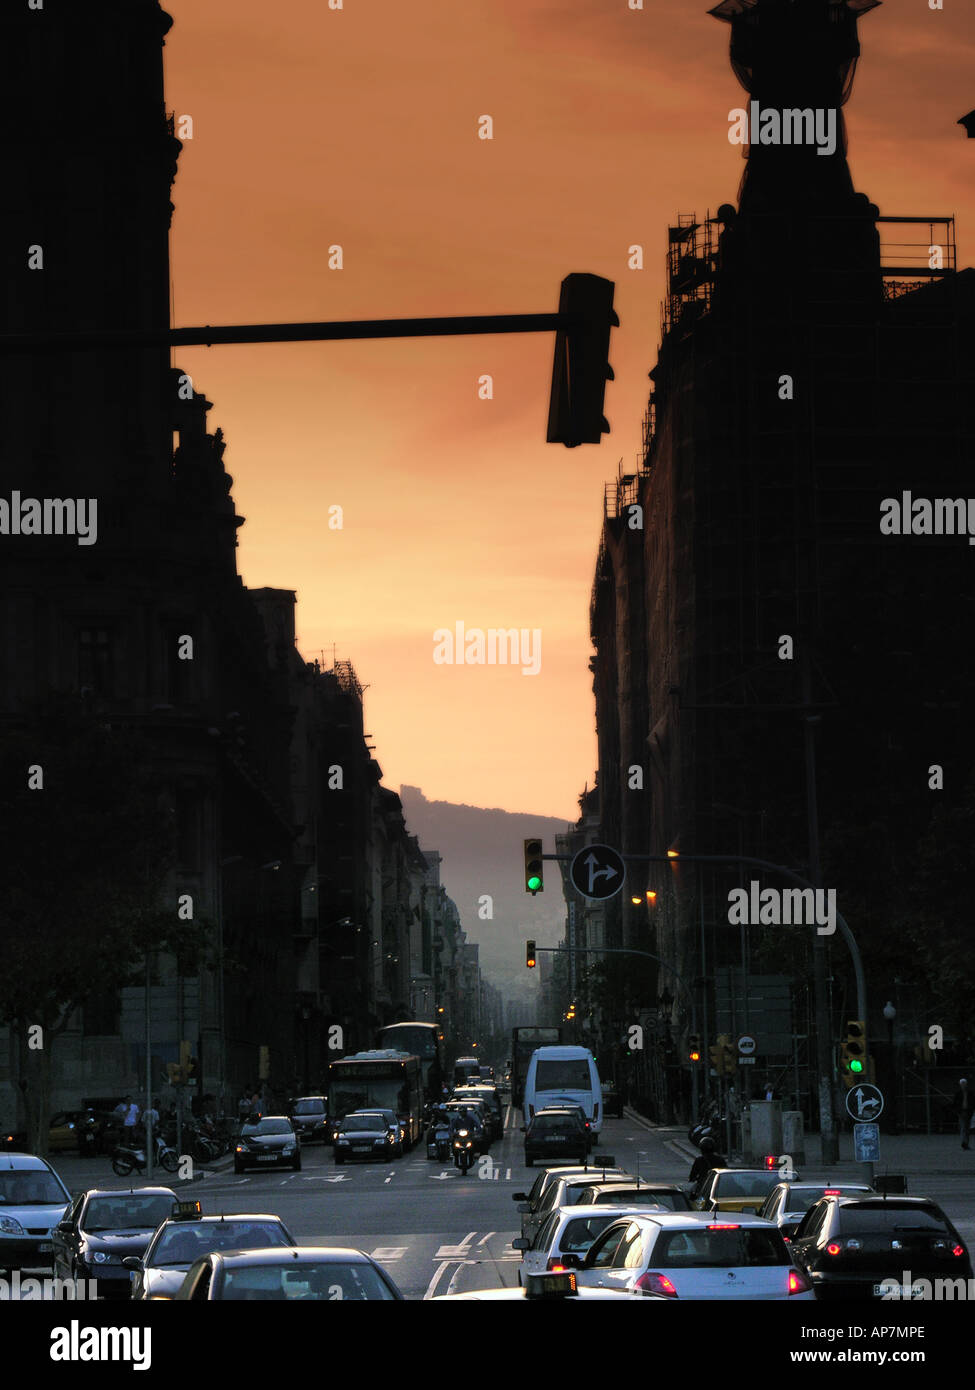 Barcelona traffic at dusk Stock Photo